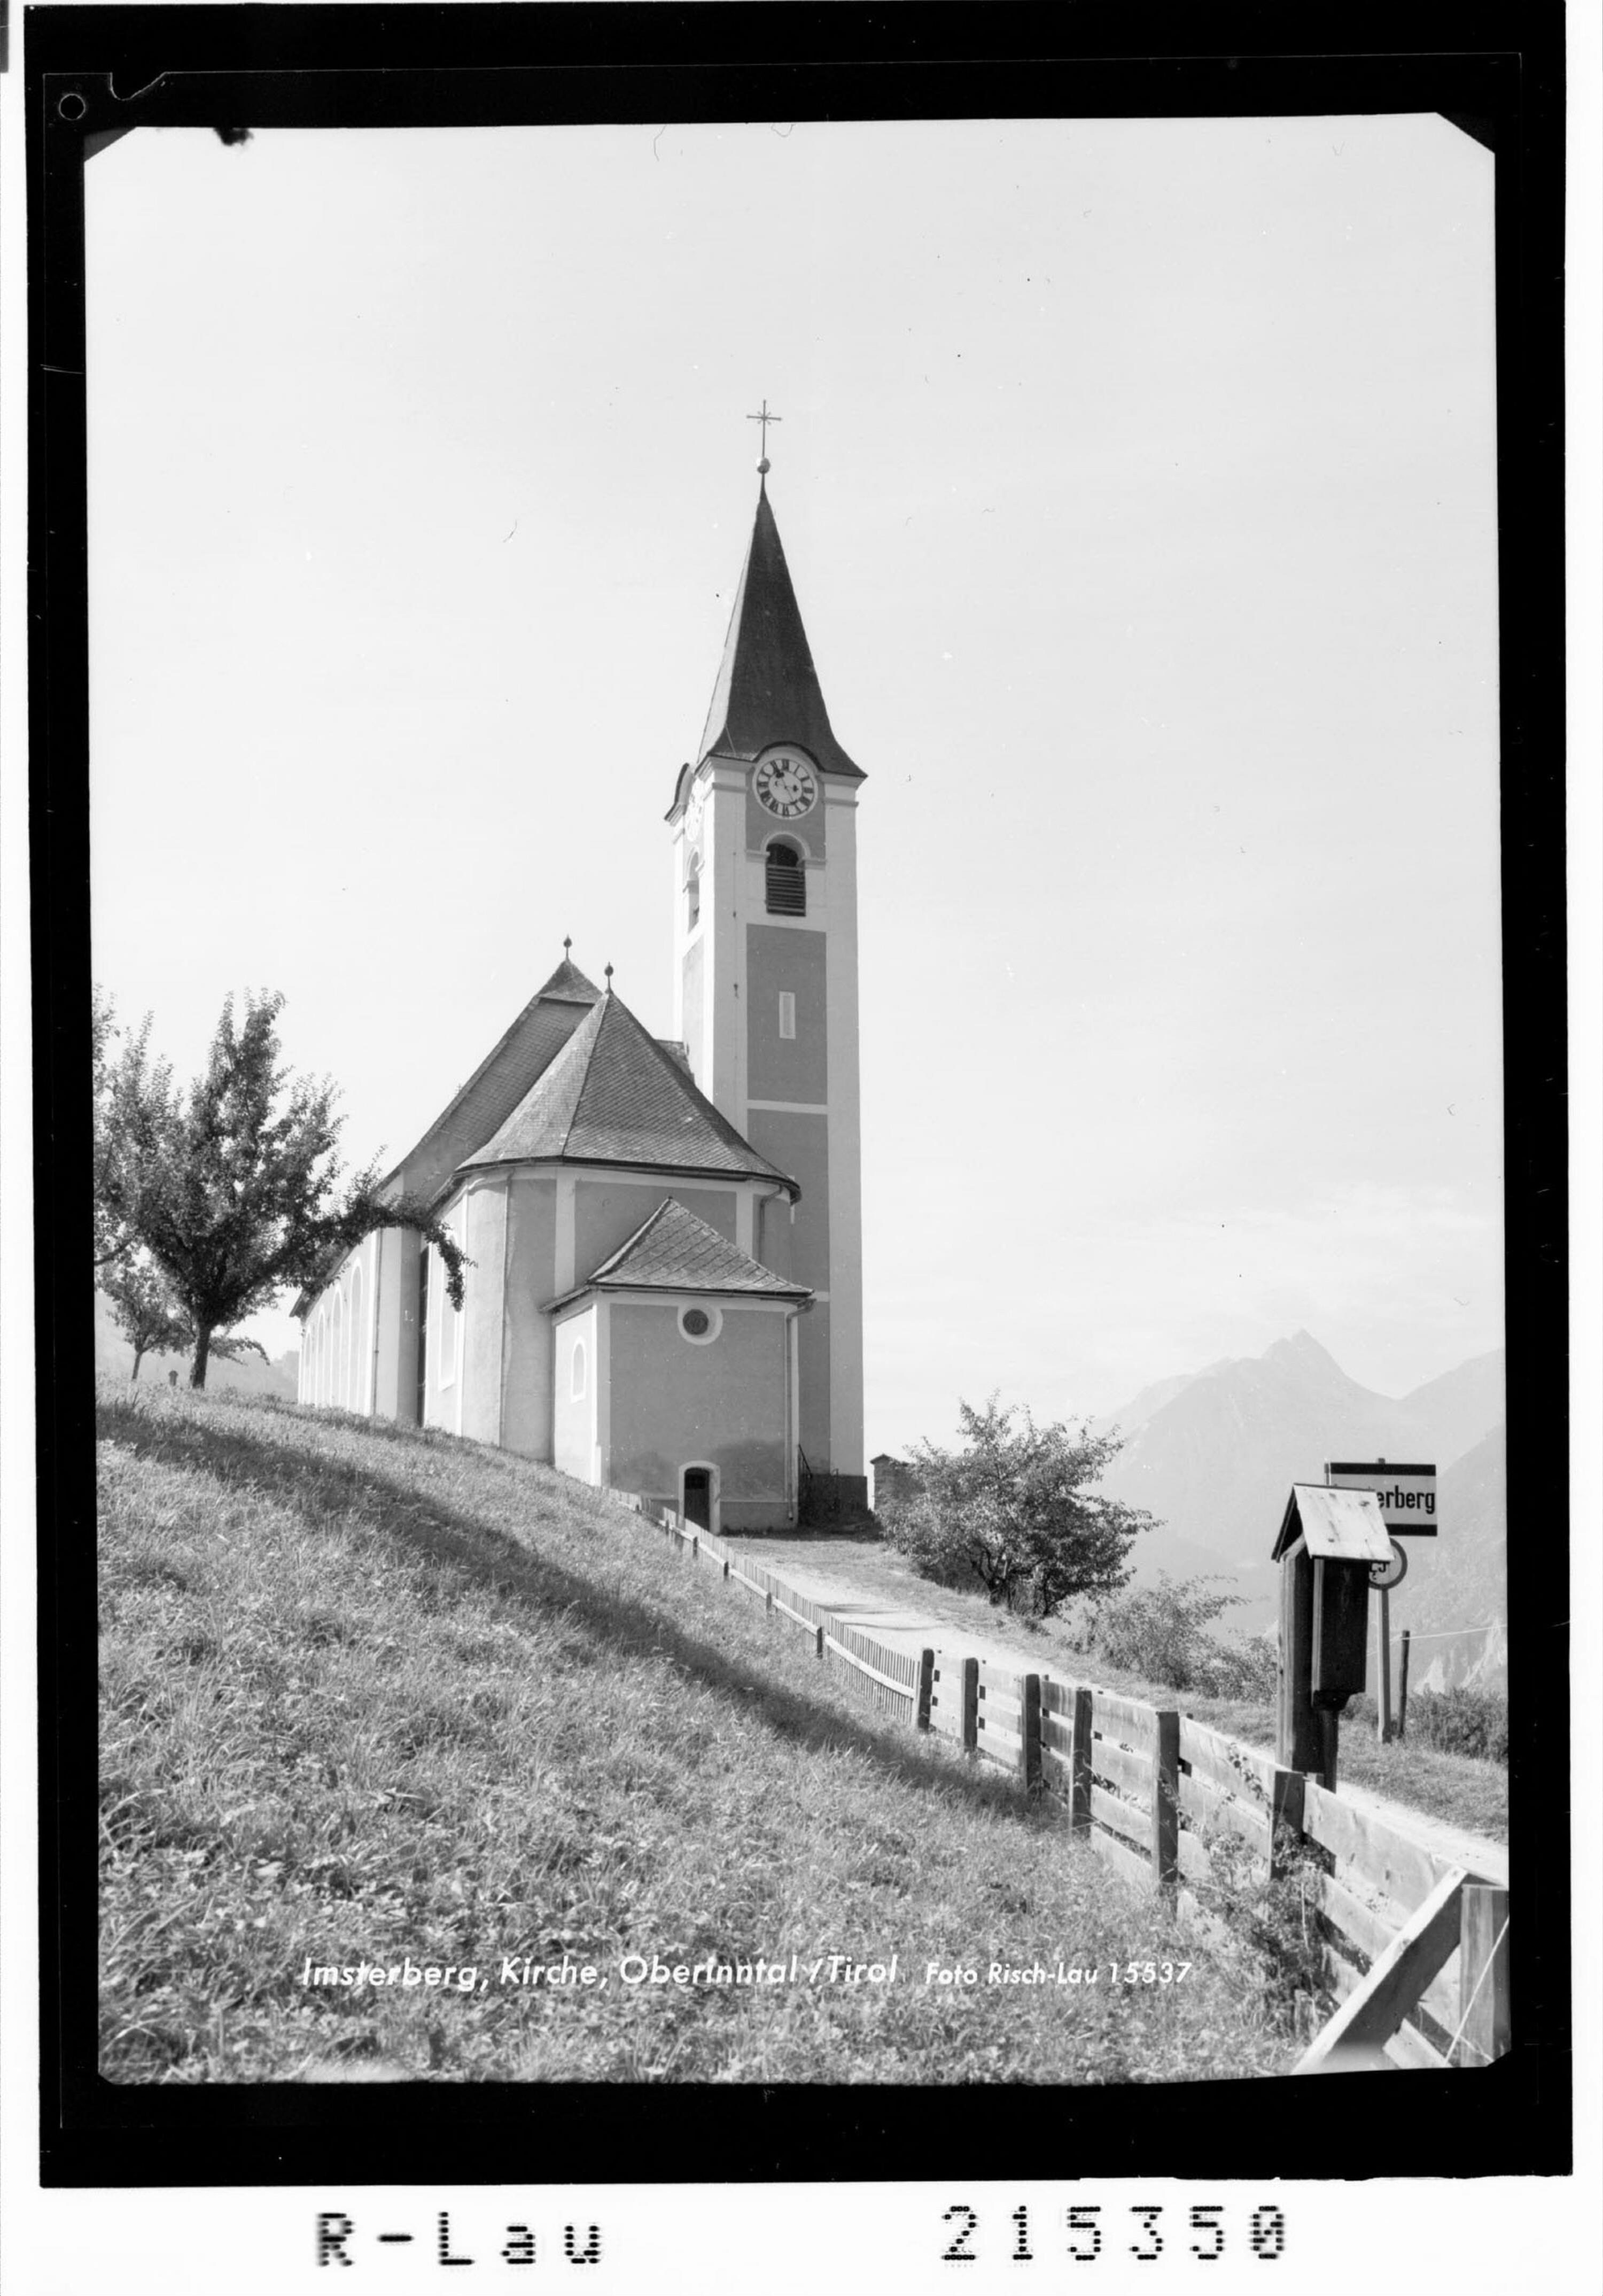 Imsterberg, Kirche, Oberinntal / Tirol></div>


    <hr>
    <div class=